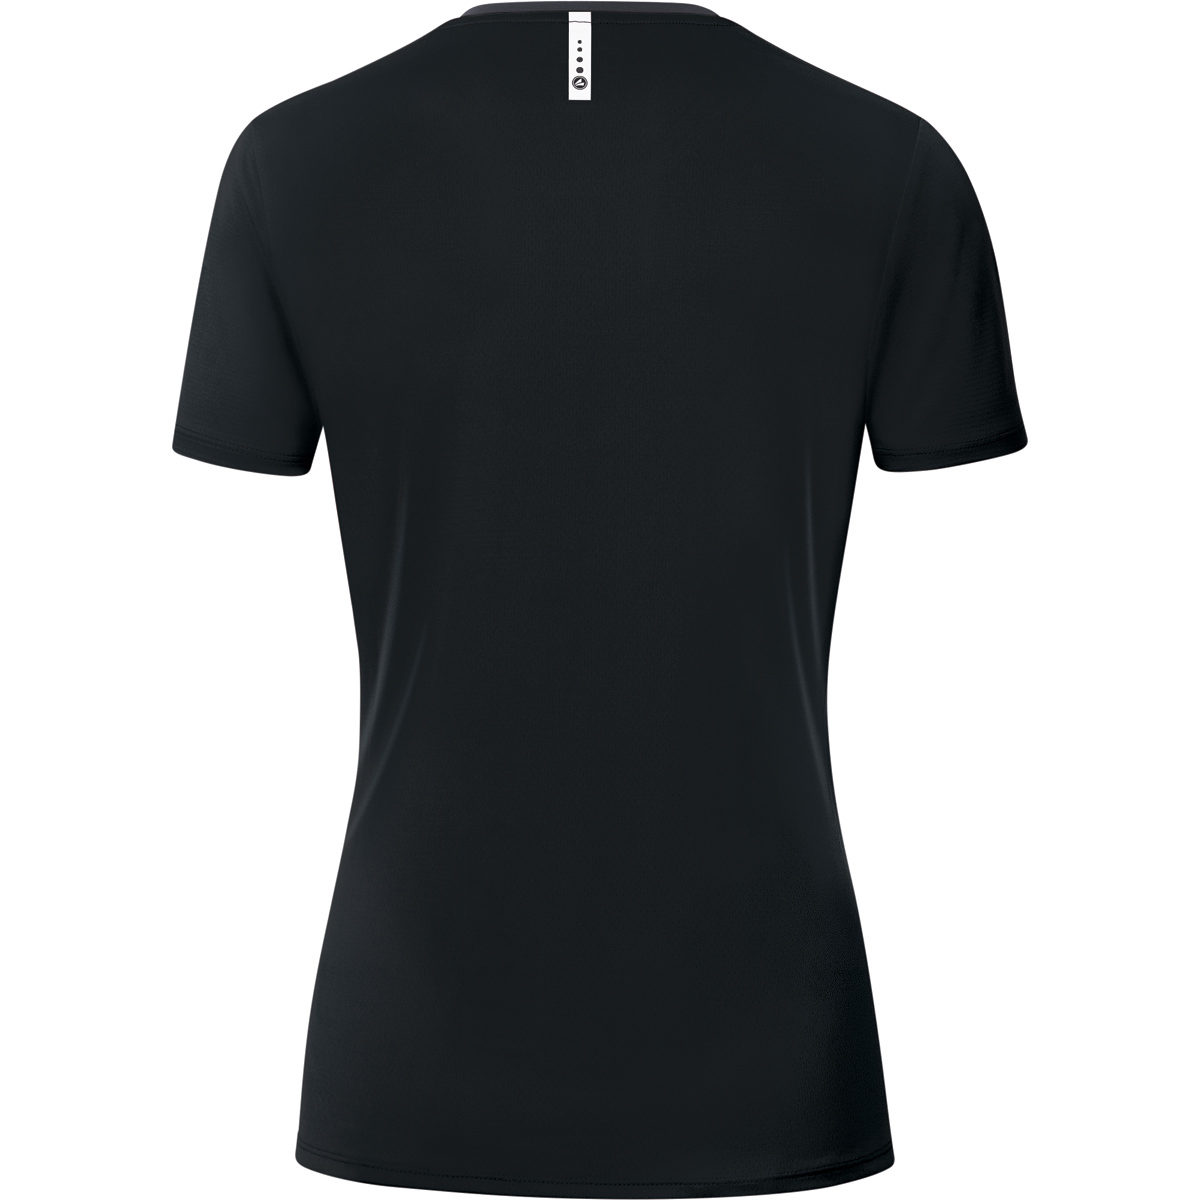 2.0 JAKO T-Shirt 36, schwarz/anthrazit, Damen, Champ 6120 Gr.